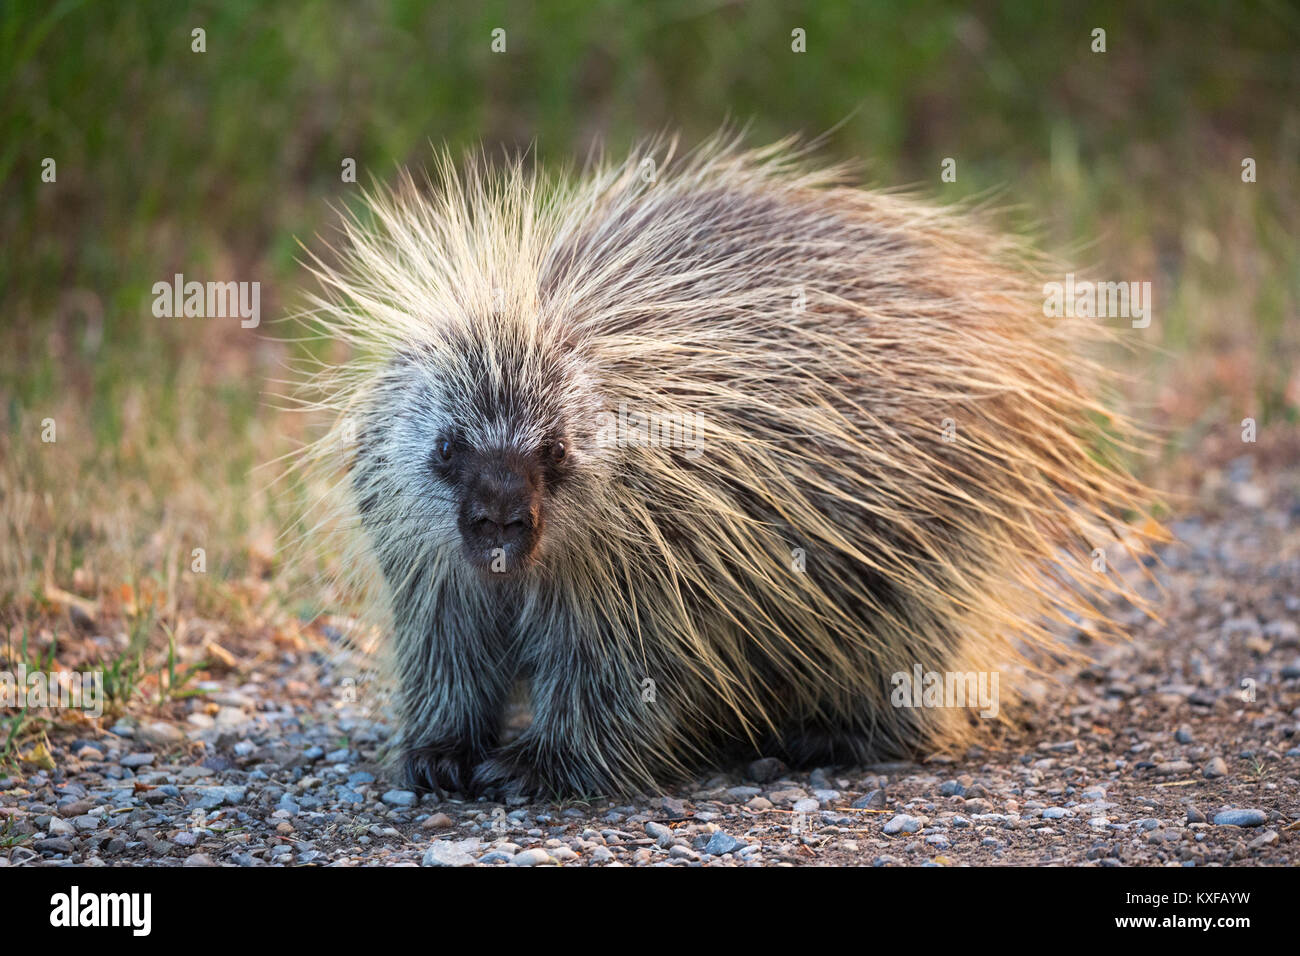 Porcupine in city wildlife sanctuary (Erethizon dorsatum) Stock Photo